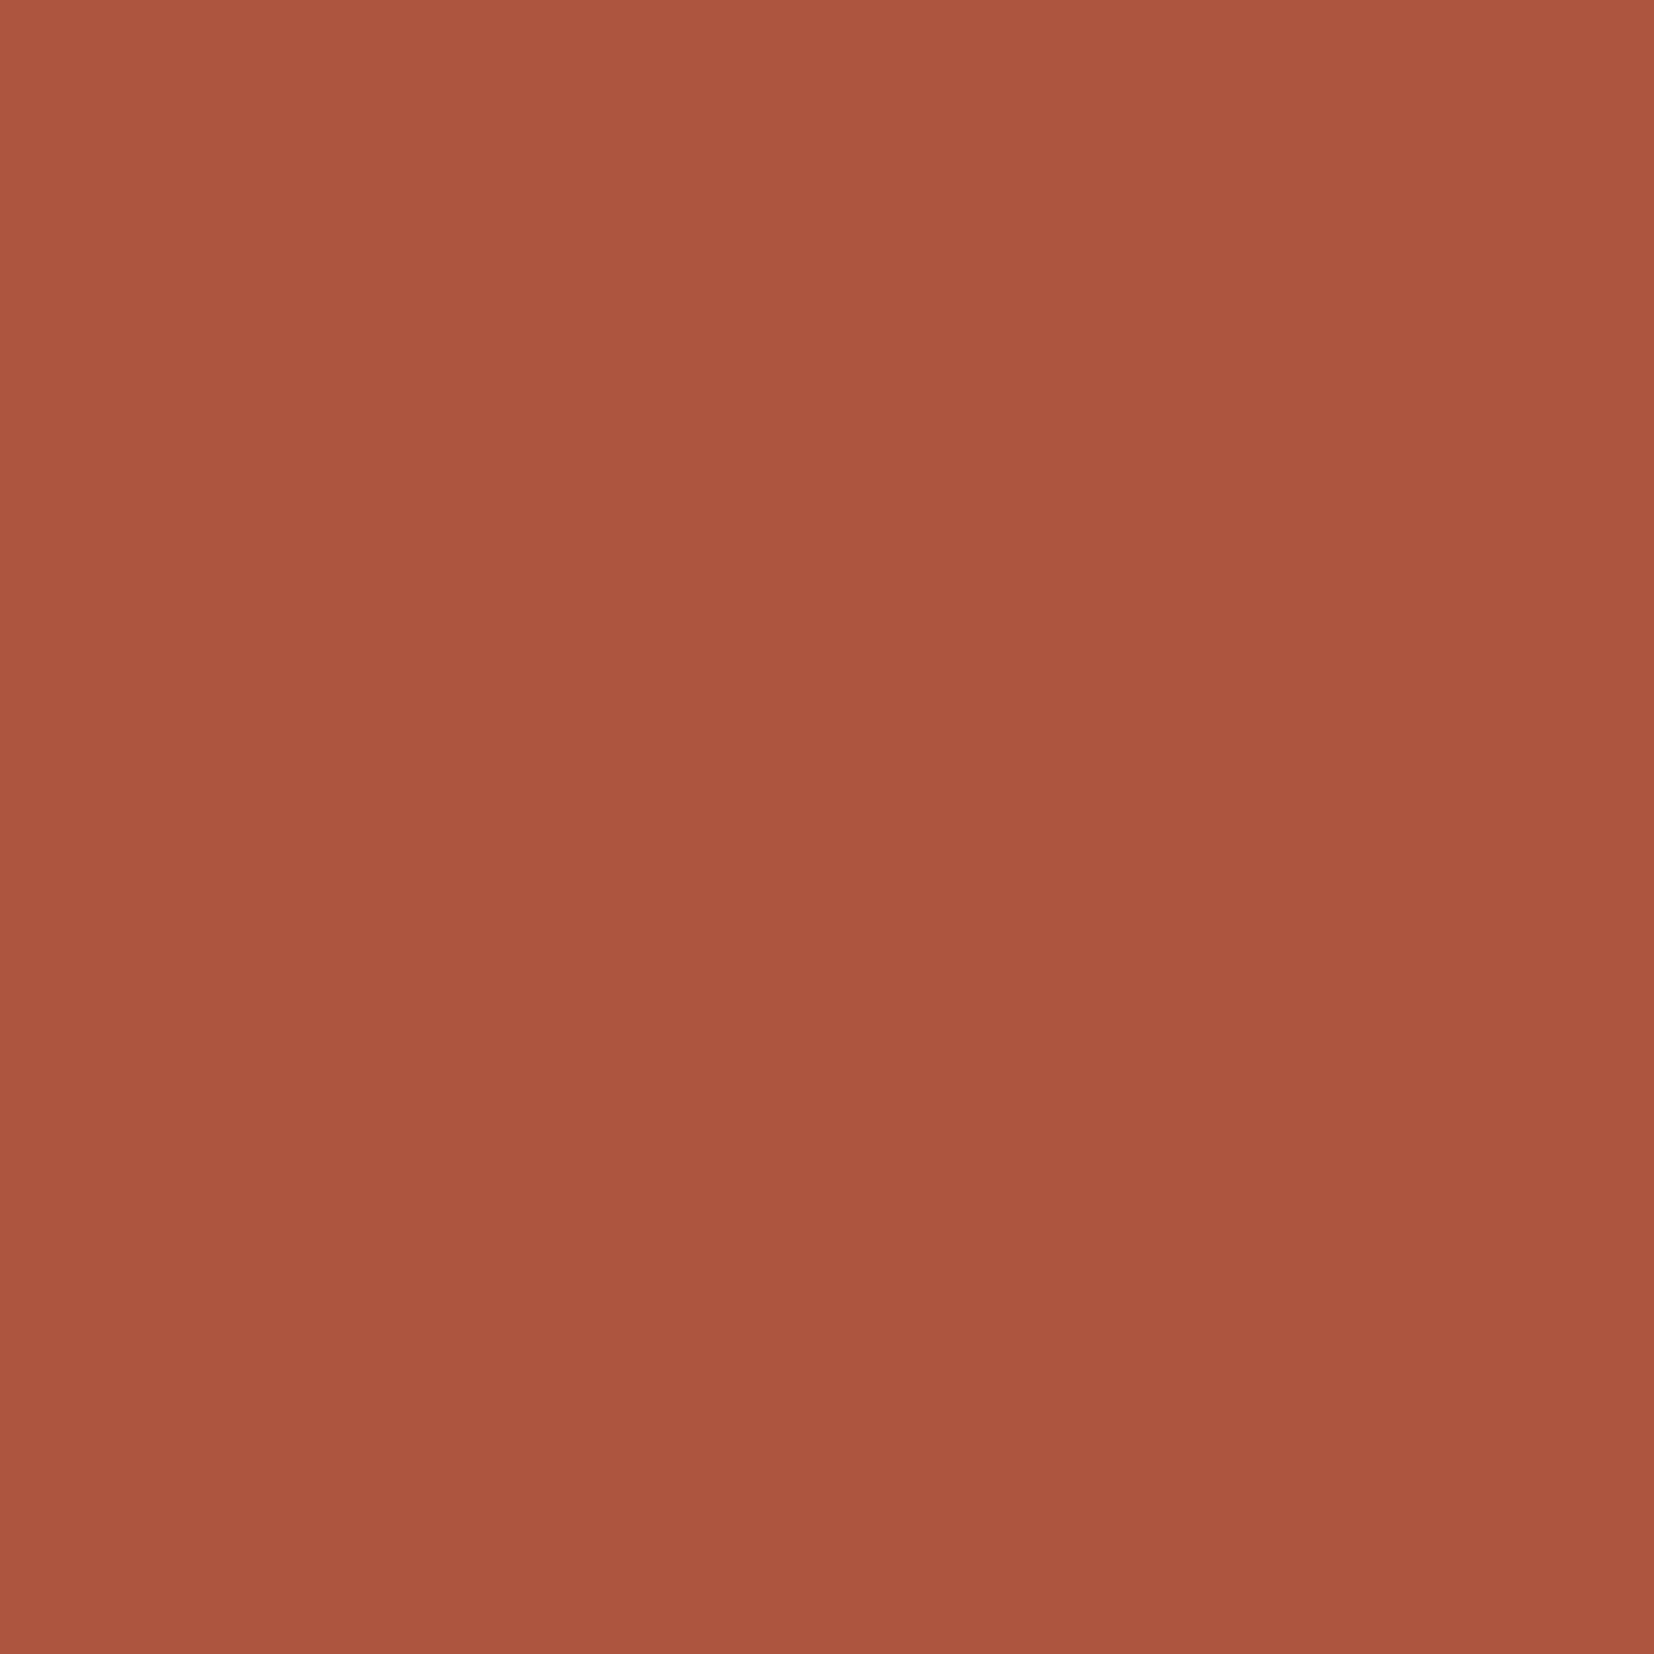 image of brown orange color